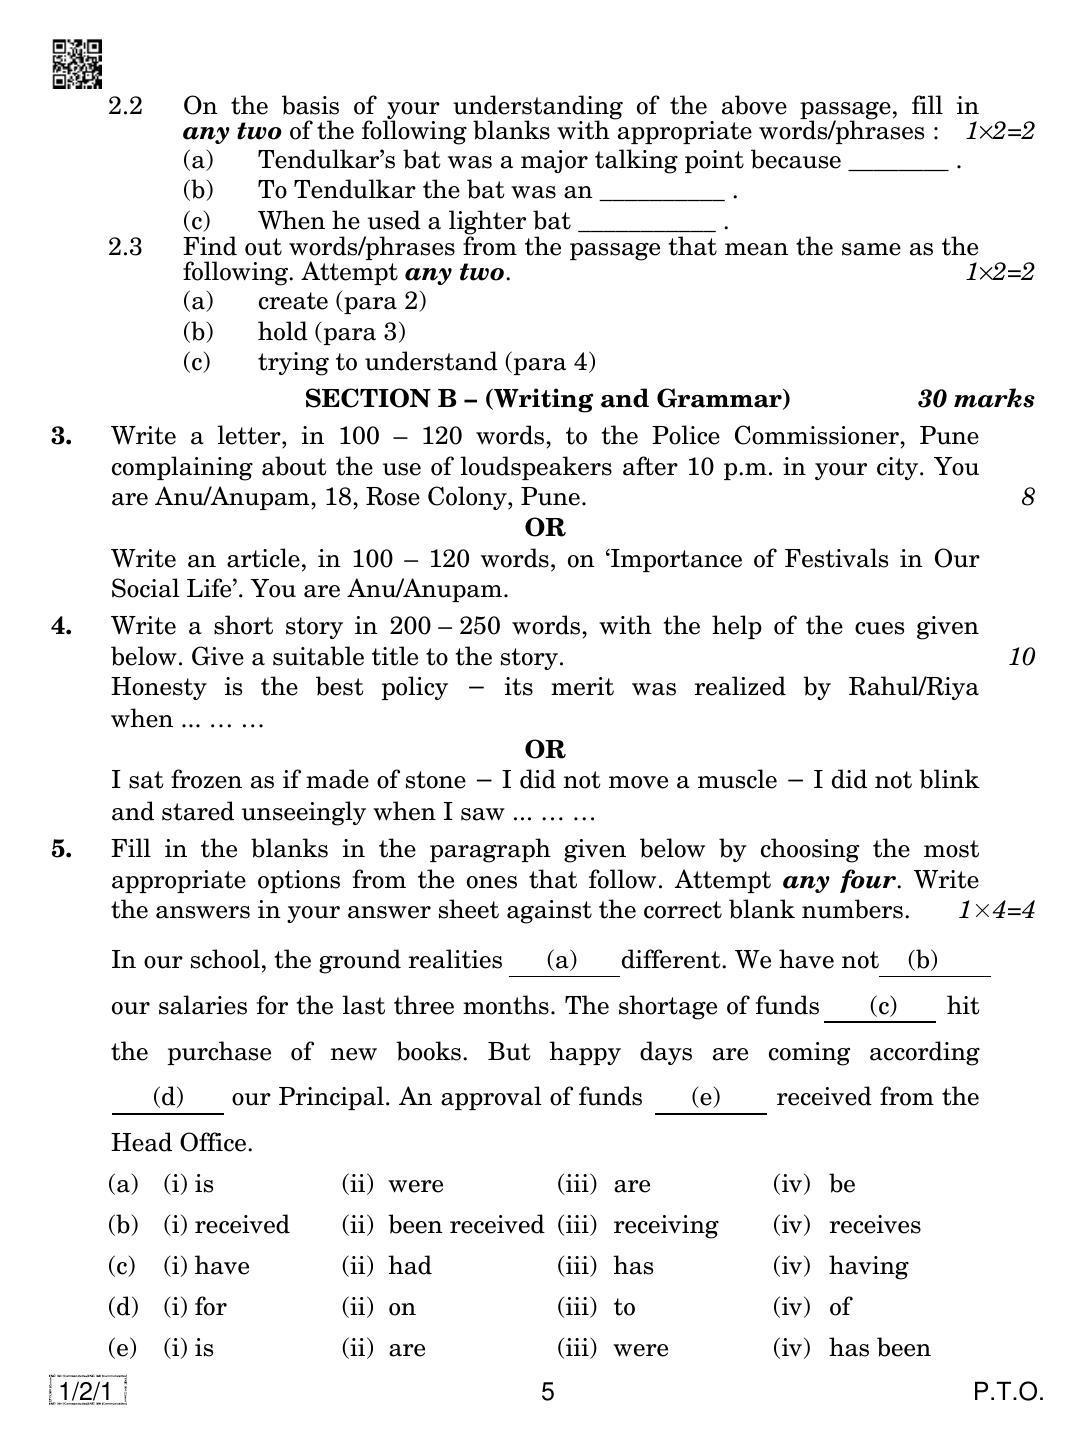 CBSE Class 10 1-2-1 ENGLISH COMMUNICATIVE 2019 Question Paper - Page 5